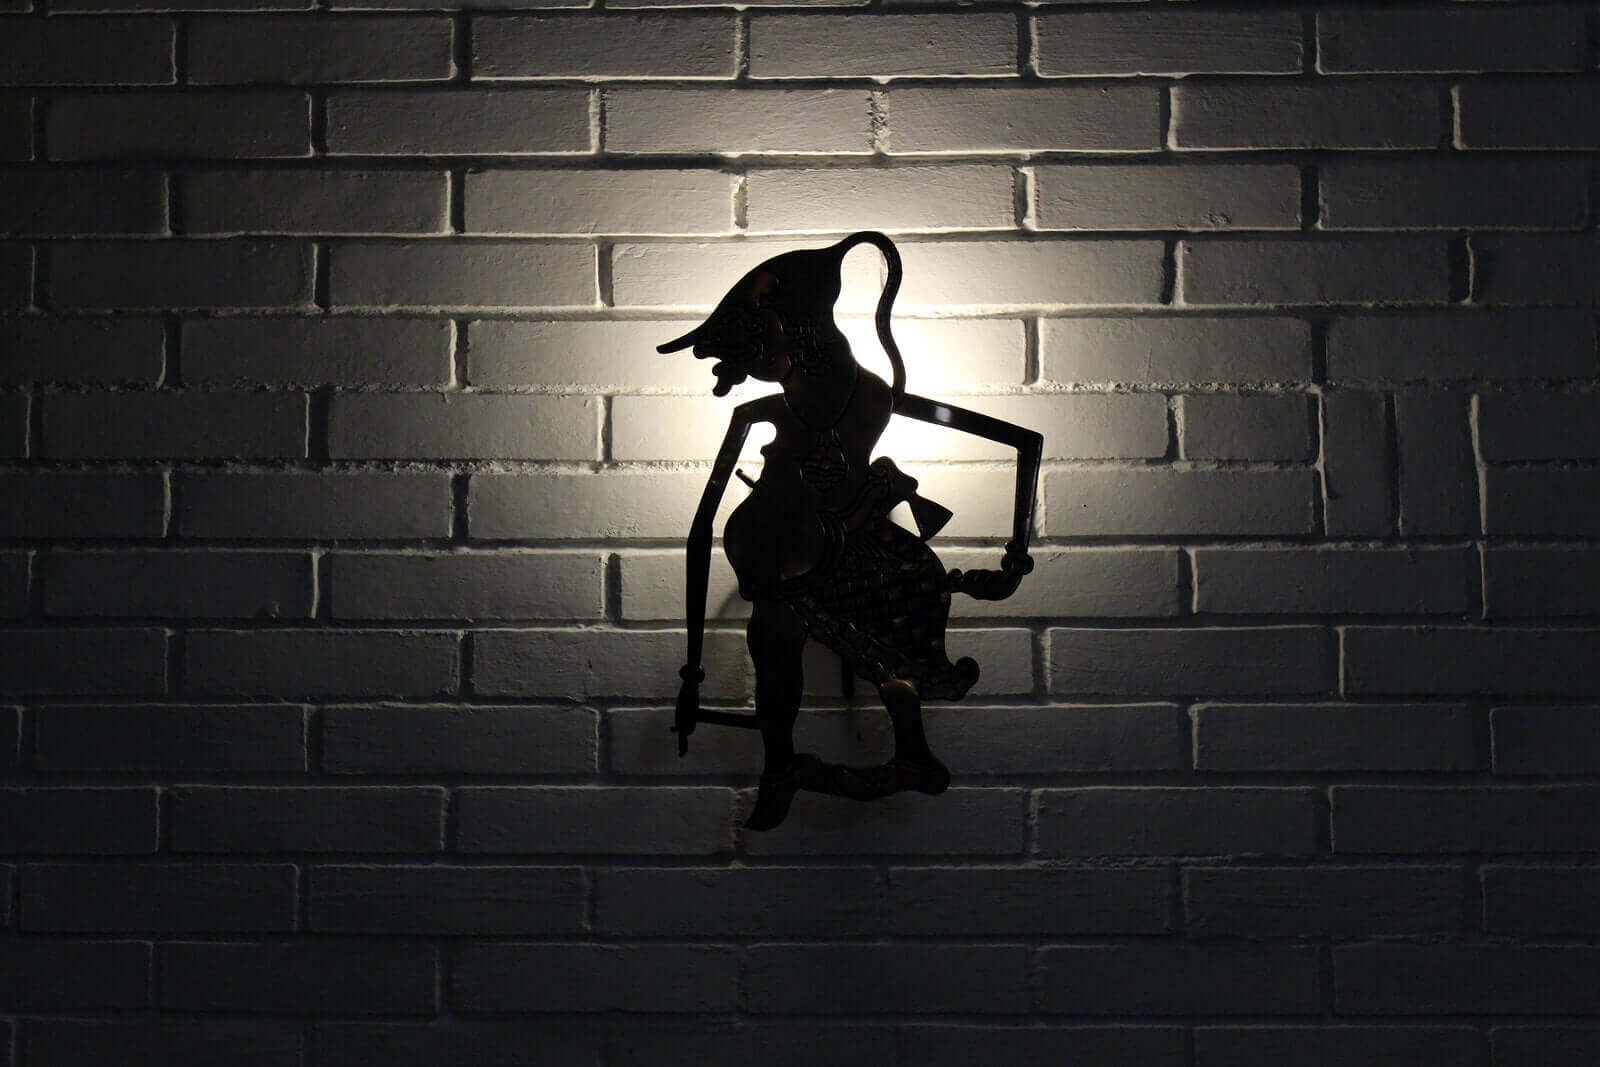 A shadow lamp.